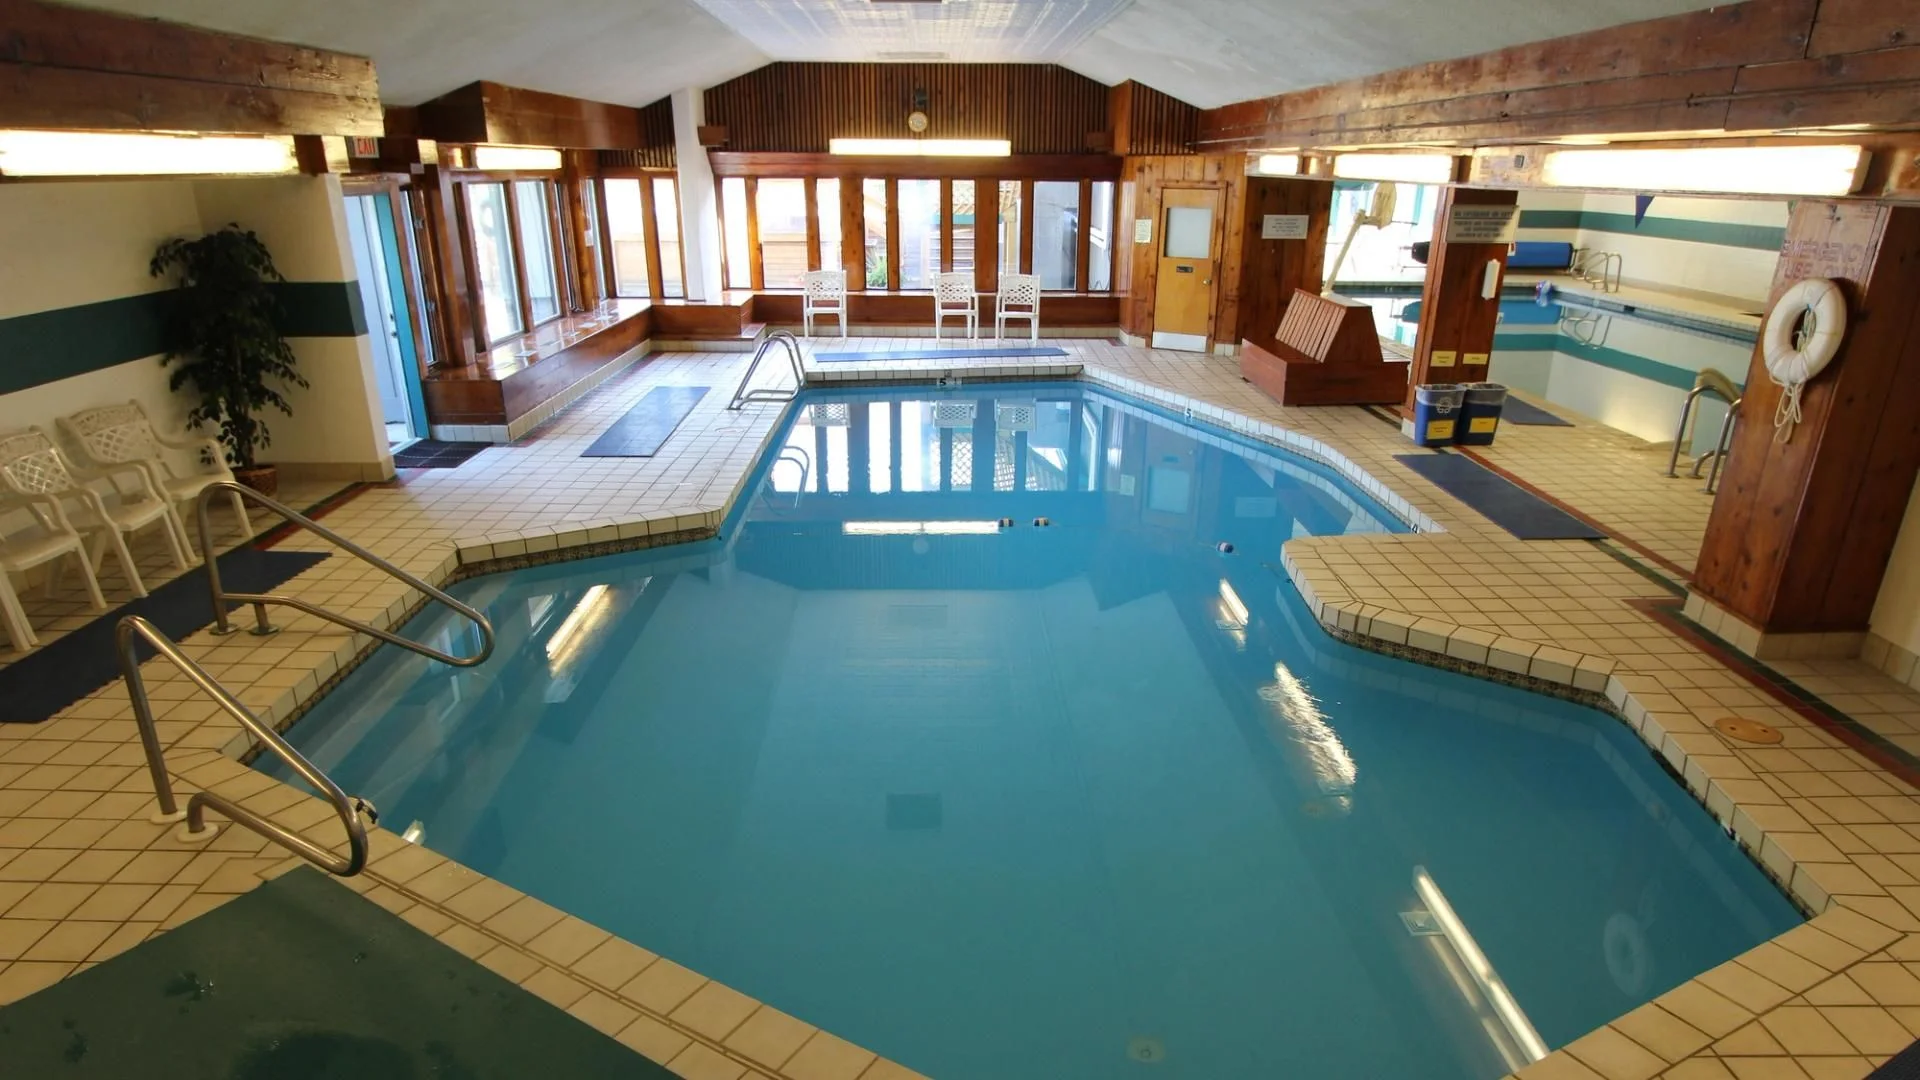 Village Of Loon Mountain Indoor Pool